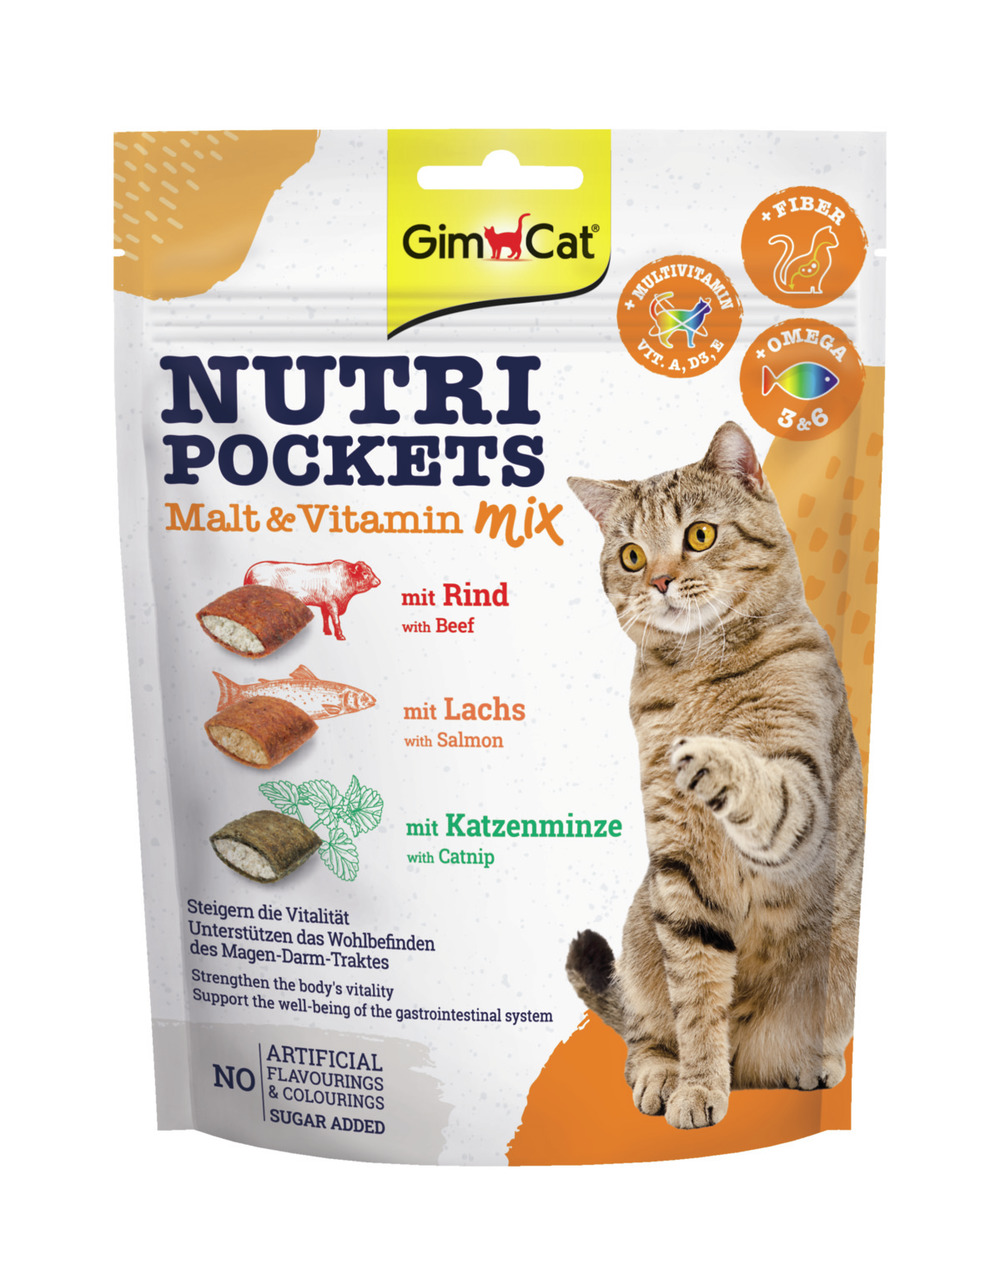 GimCat Nutri Pockets Malt & Vitamin Mix mit Rind, Lachs & Katzenminze Katzen Snack 150 g